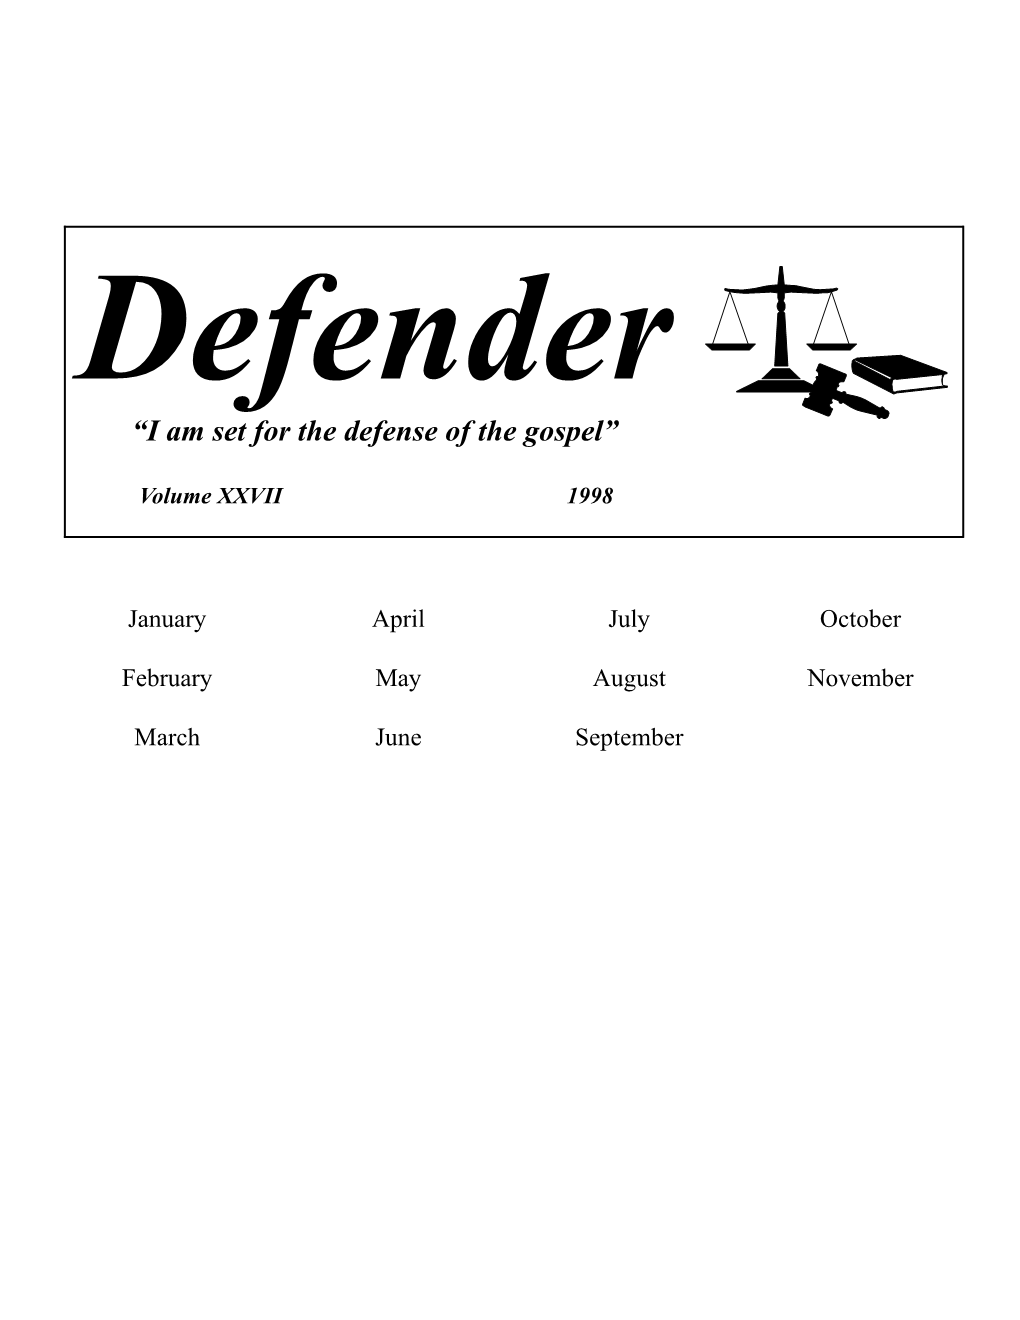 Defender, Vol. XXVII, 1998